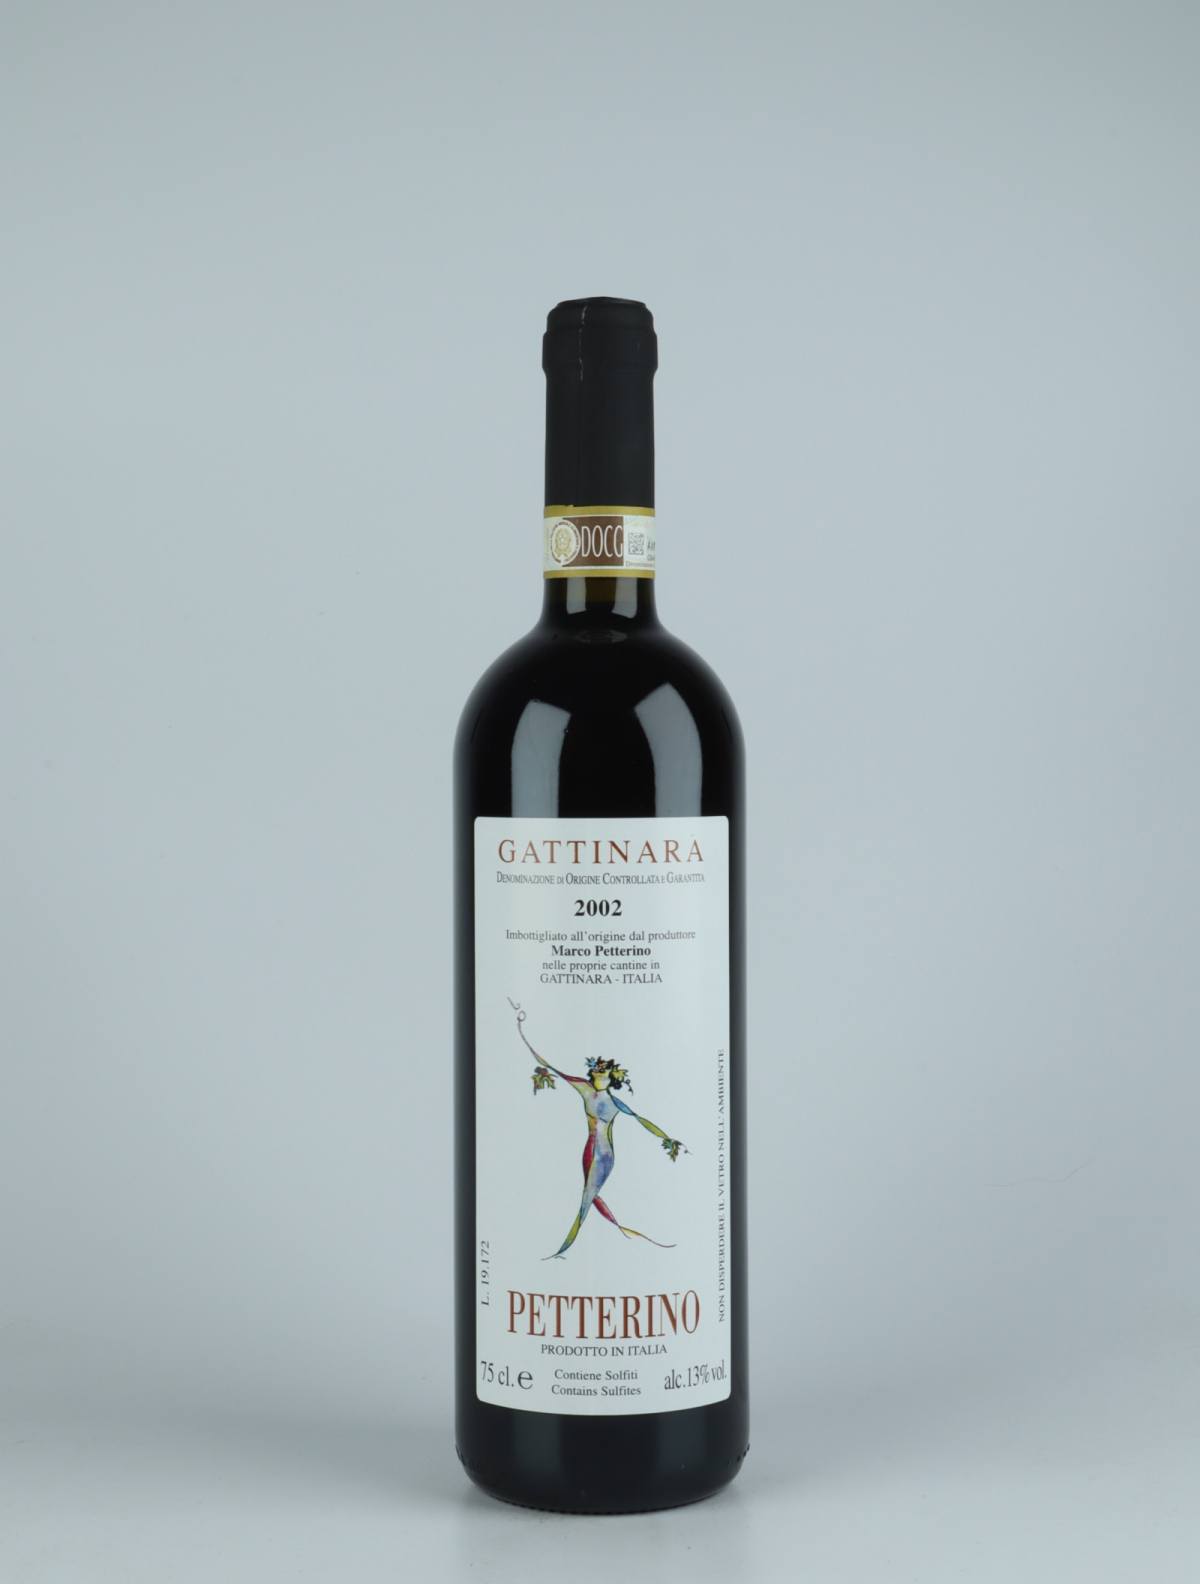 En flaske 2002 Gattinara Rødvin fra Petterino, Piemonte i Italien